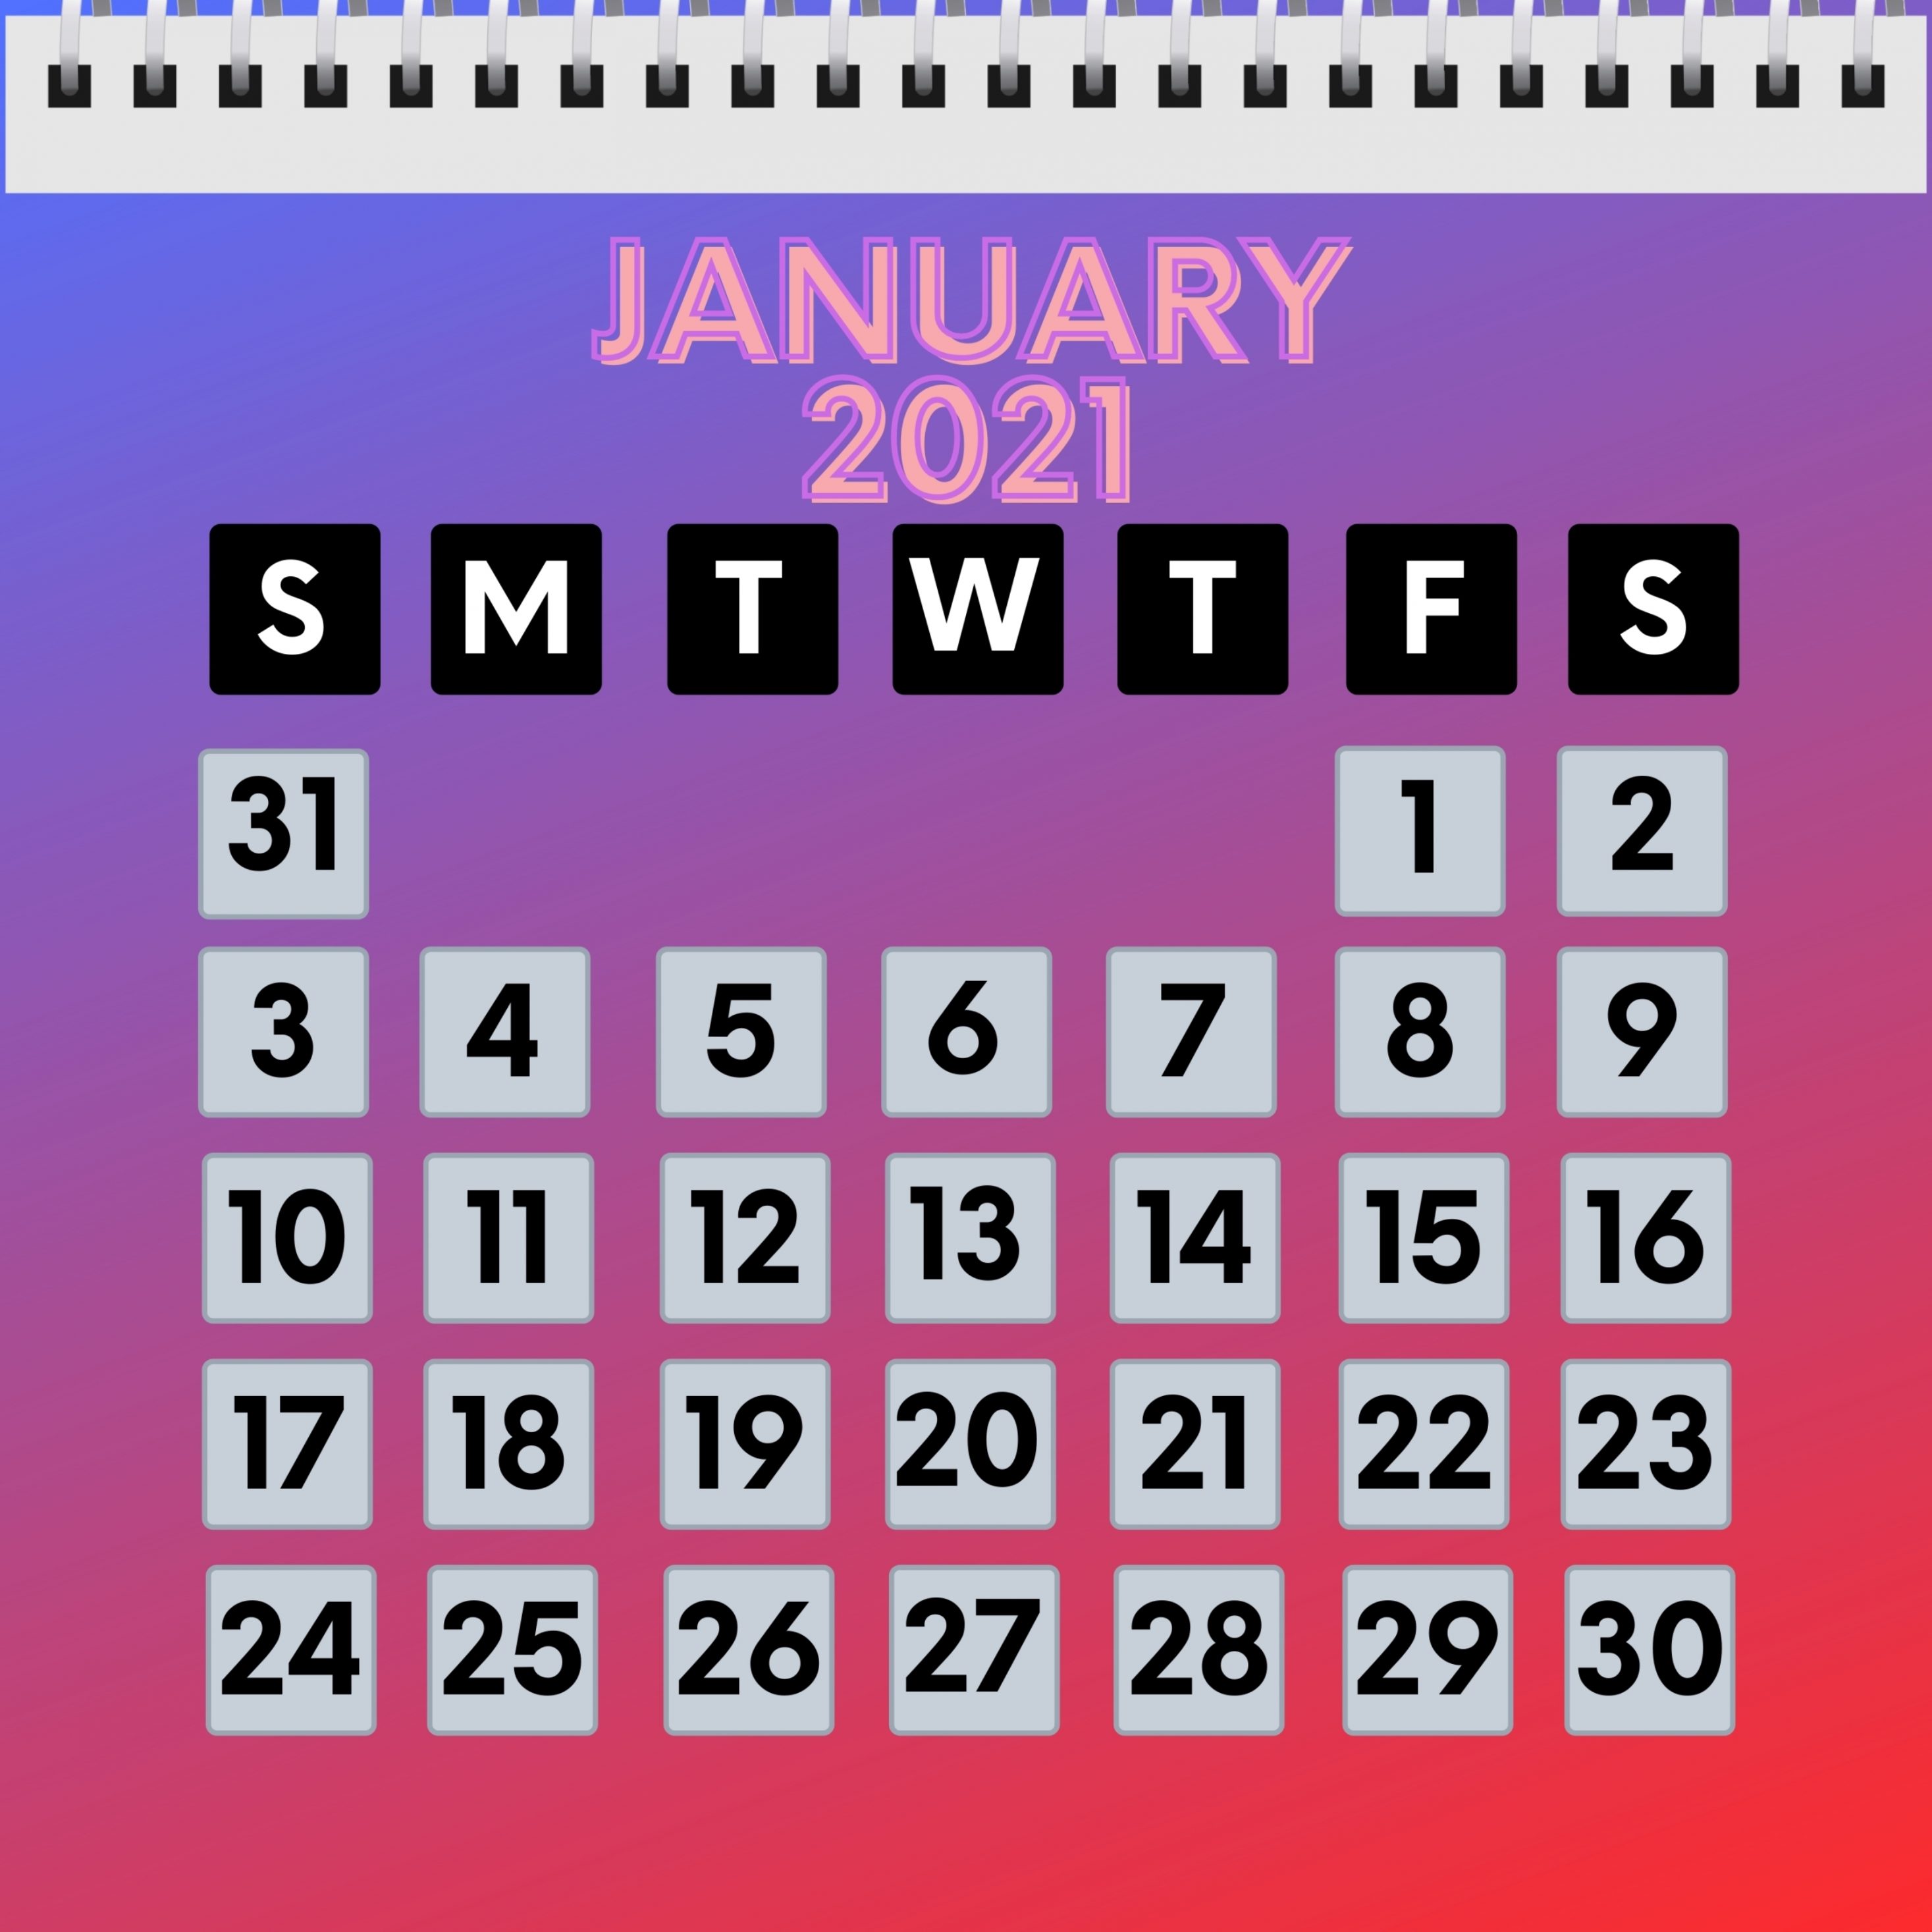 2934x2934 iOS iPad wallpaper 4k January 2021 Calendar iPad Wallpaper 2934x2934 pixels resolution